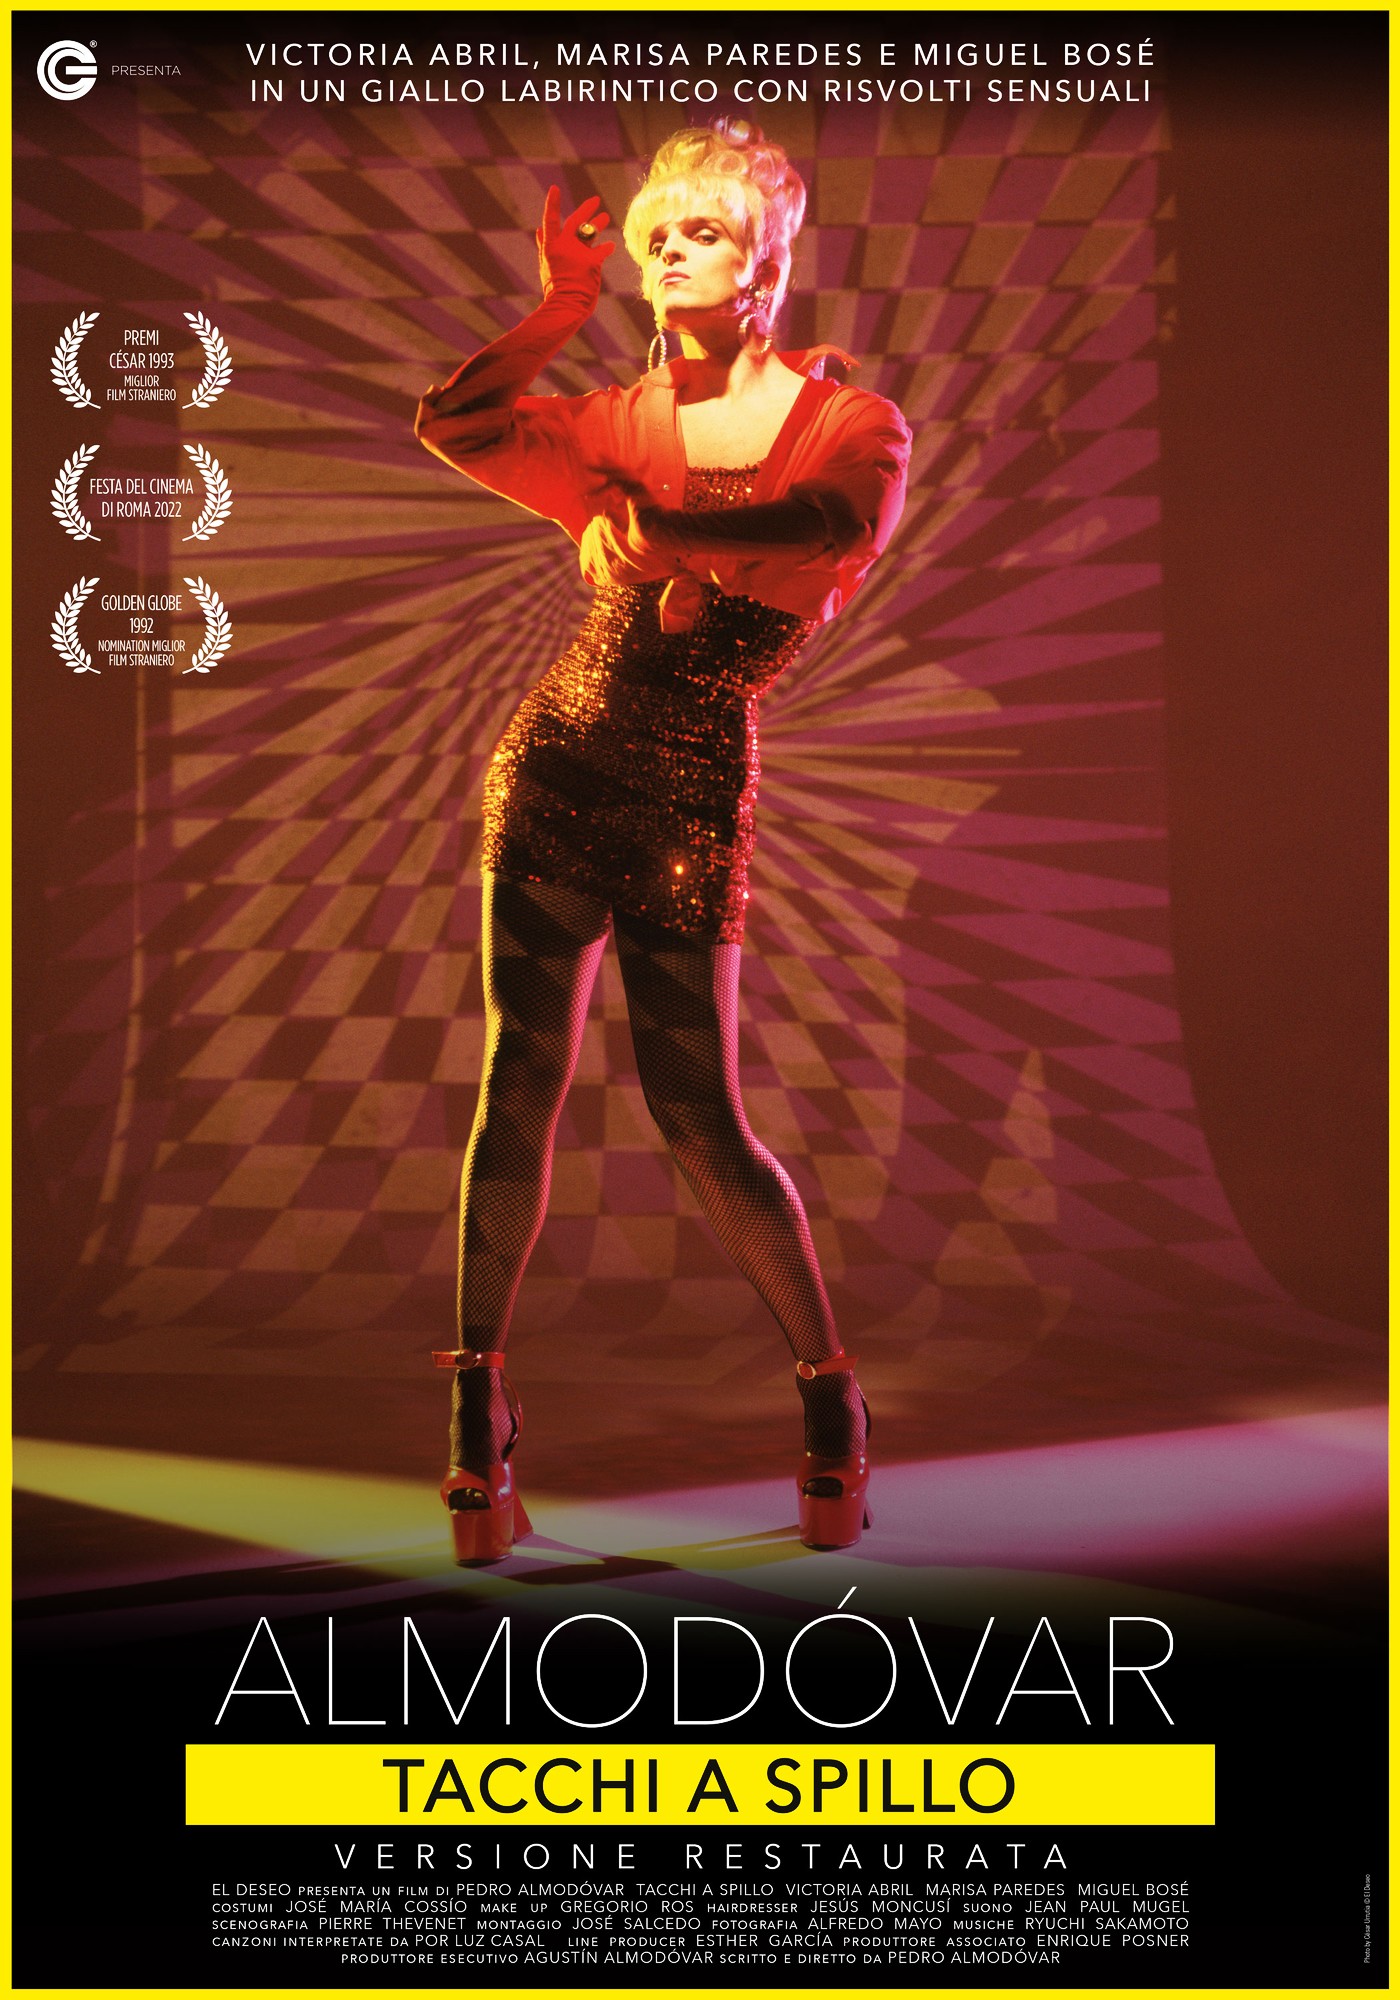 Sale HIGH HEELS Cuban Screen-print Poster for Spanish PEDRO ALMODOVAR Movie  CUBA | eBay